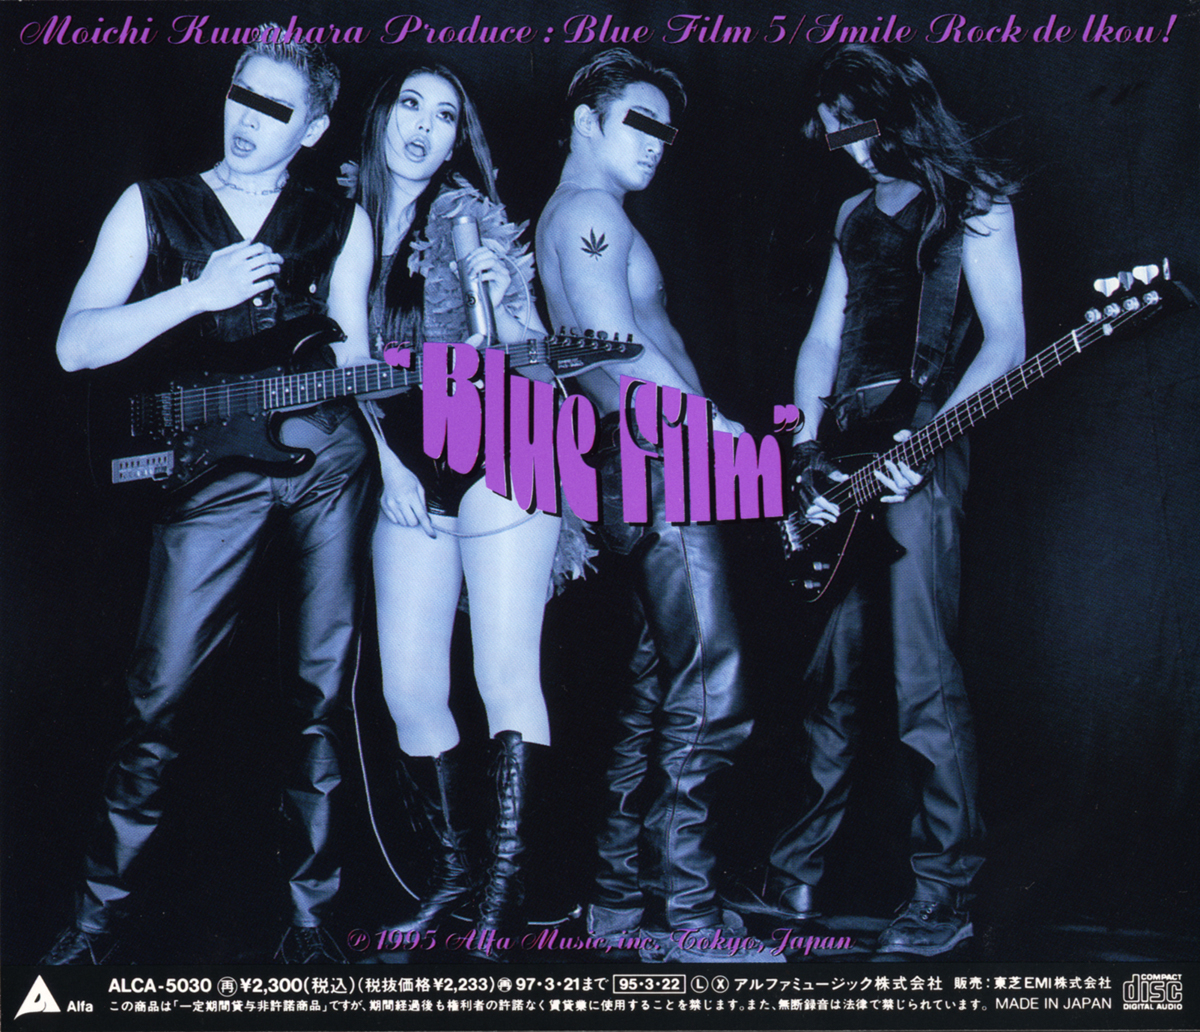 V.A. “Blue Film 5 / Smile Rock de Ikou!”